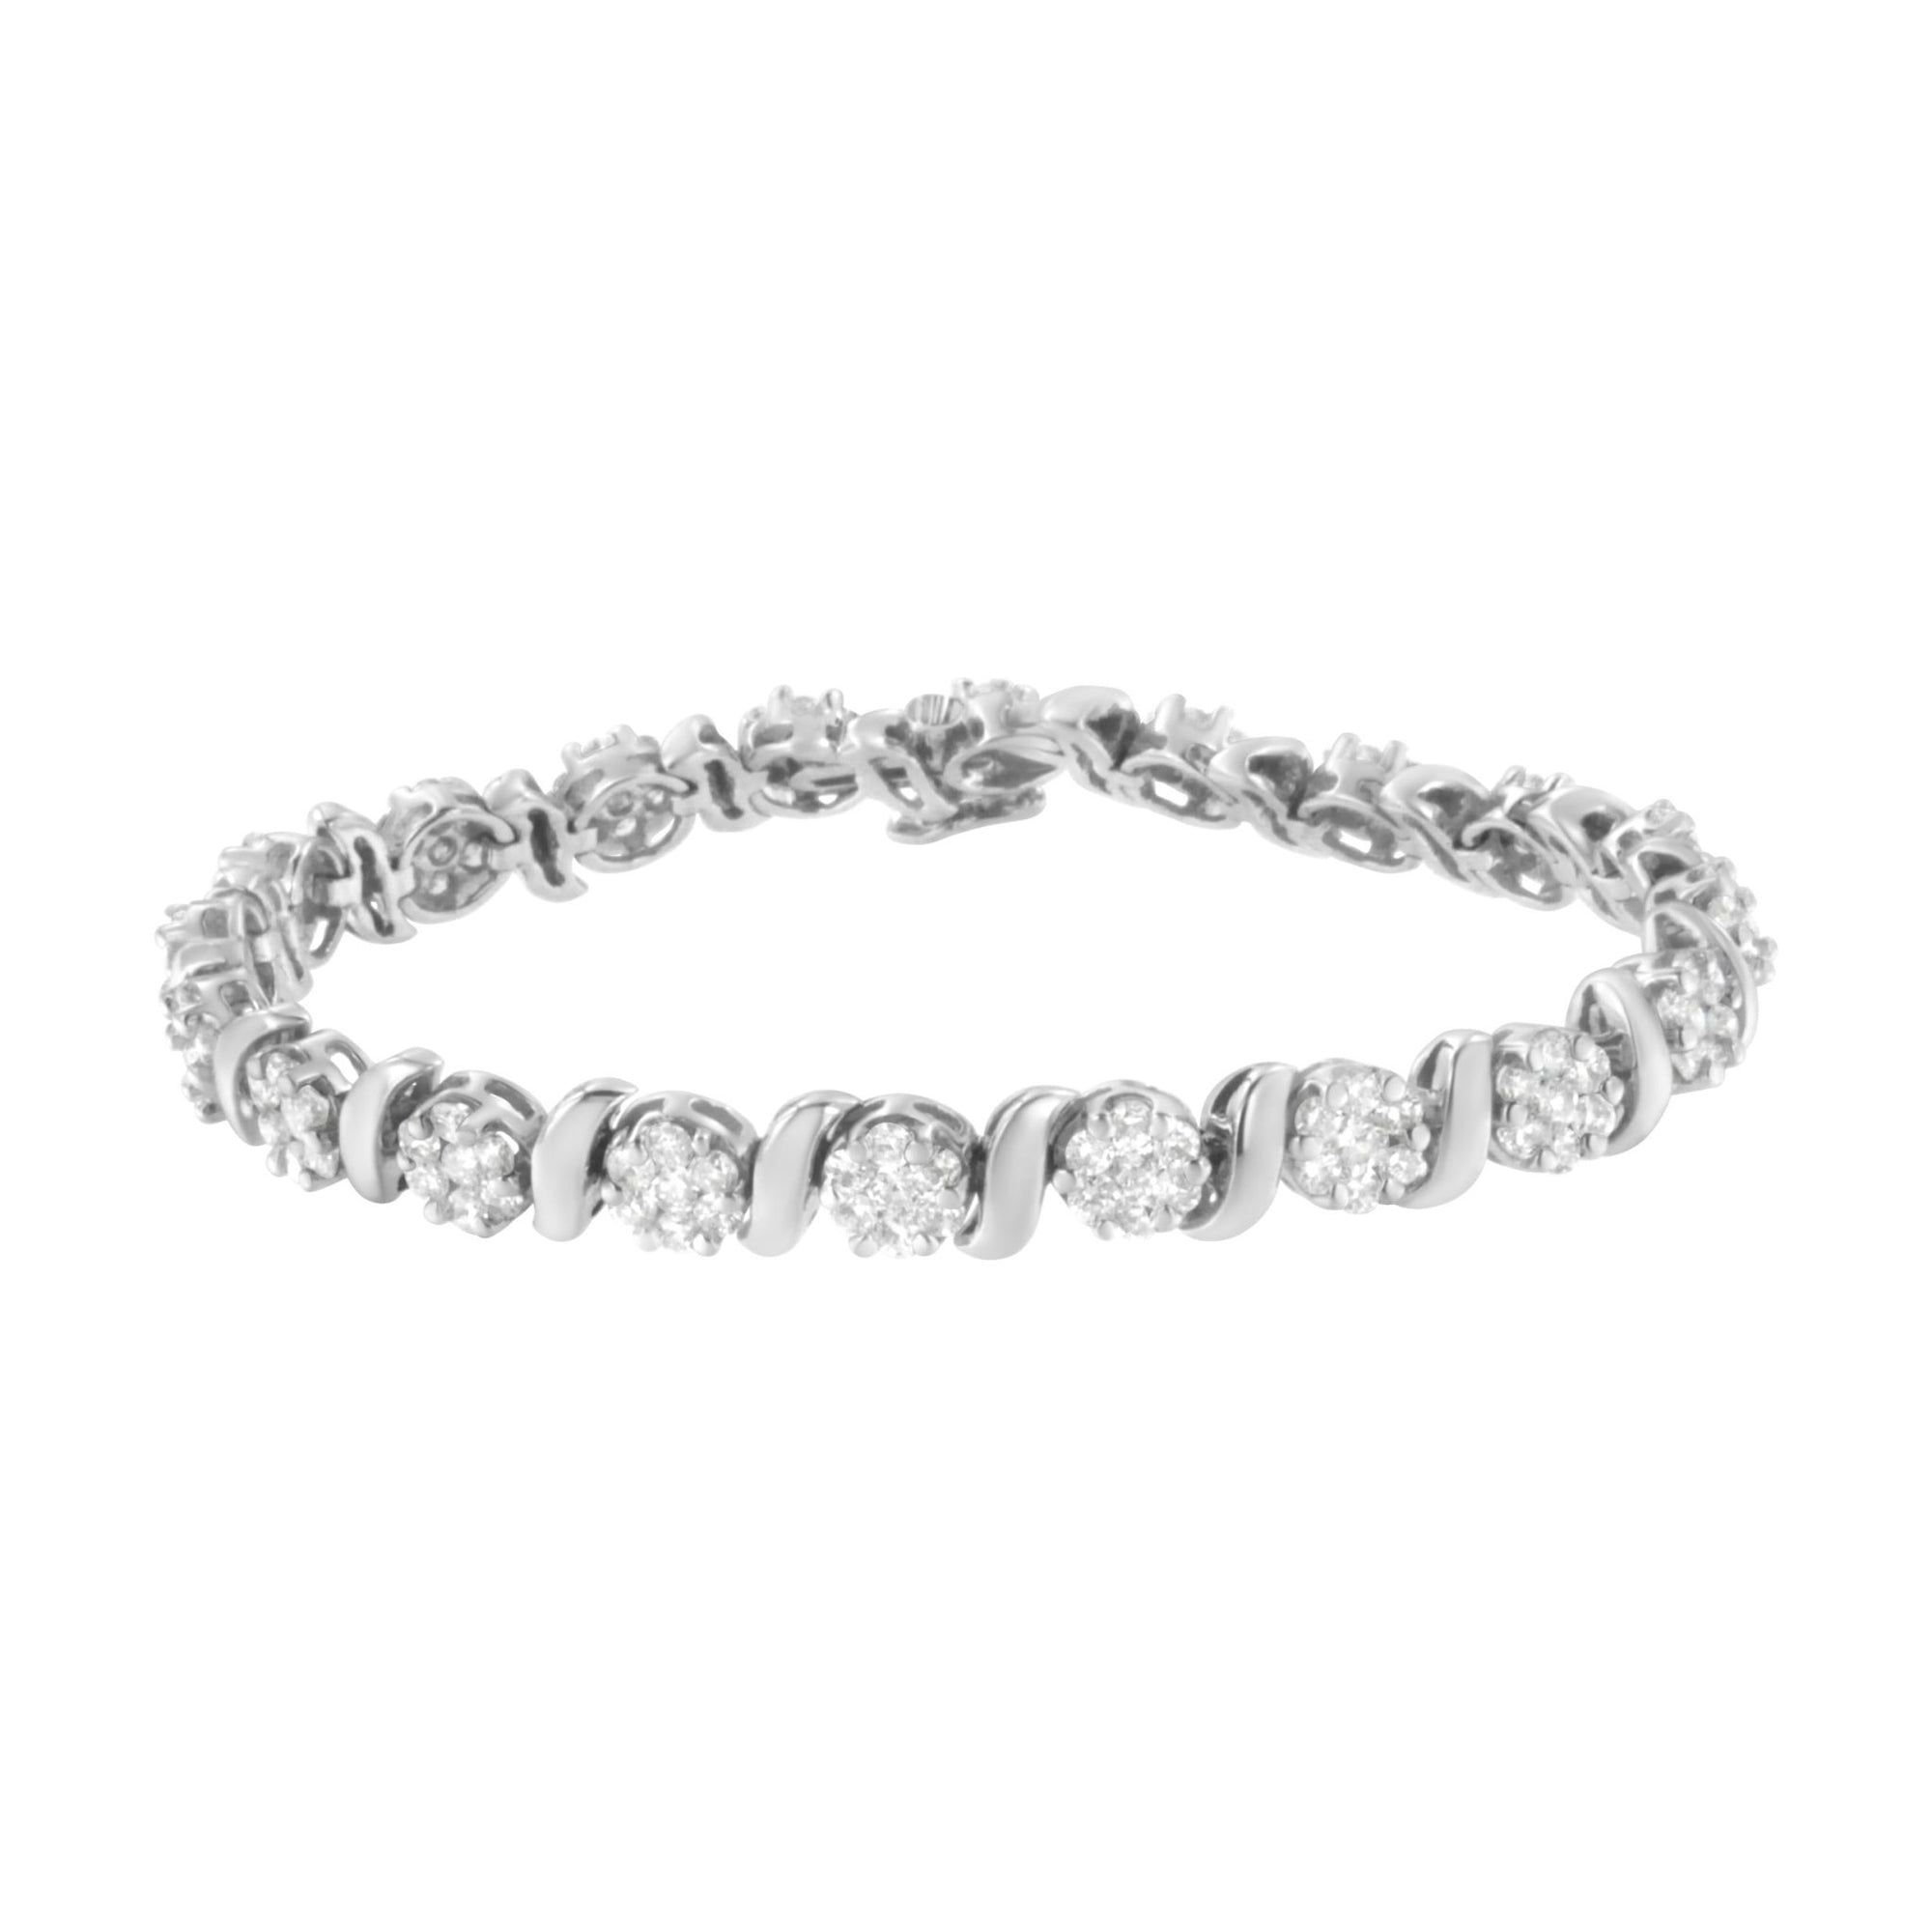 14K White Gold 5 1/4 cttw Diamond S-Link Floral Cluster Tennis Bracelet (I-J Clarity, SI2-I1 Color) - Size 7" - LinkagejewelrydesignLinkagejewelrydesign